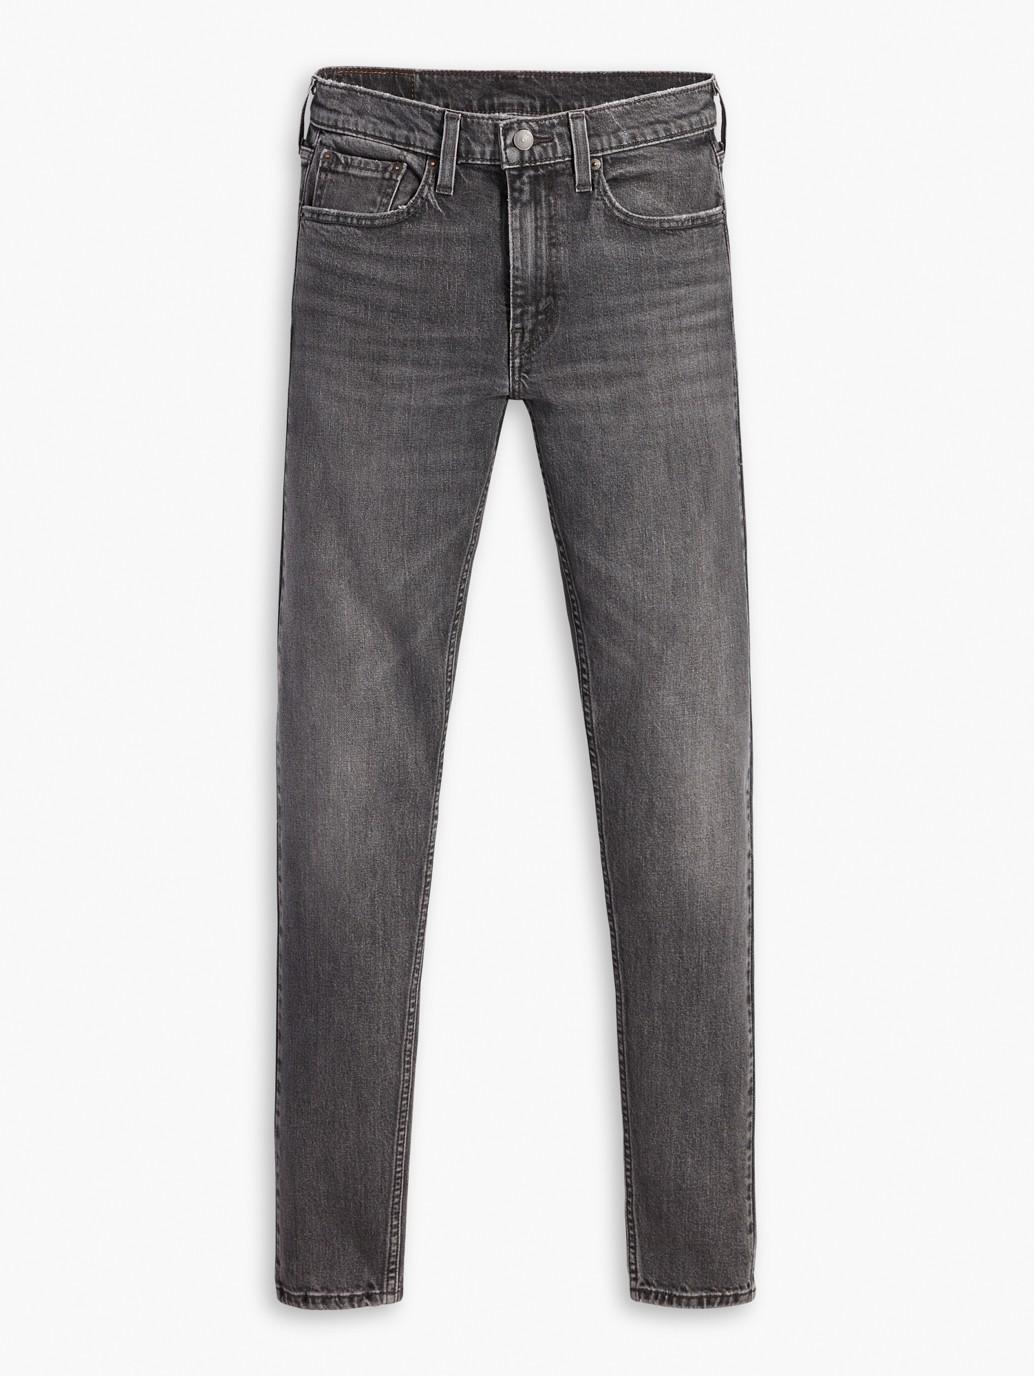 Buy Levi's® Men's Skinny Taper Jeans| Levi's Official Online Store SG